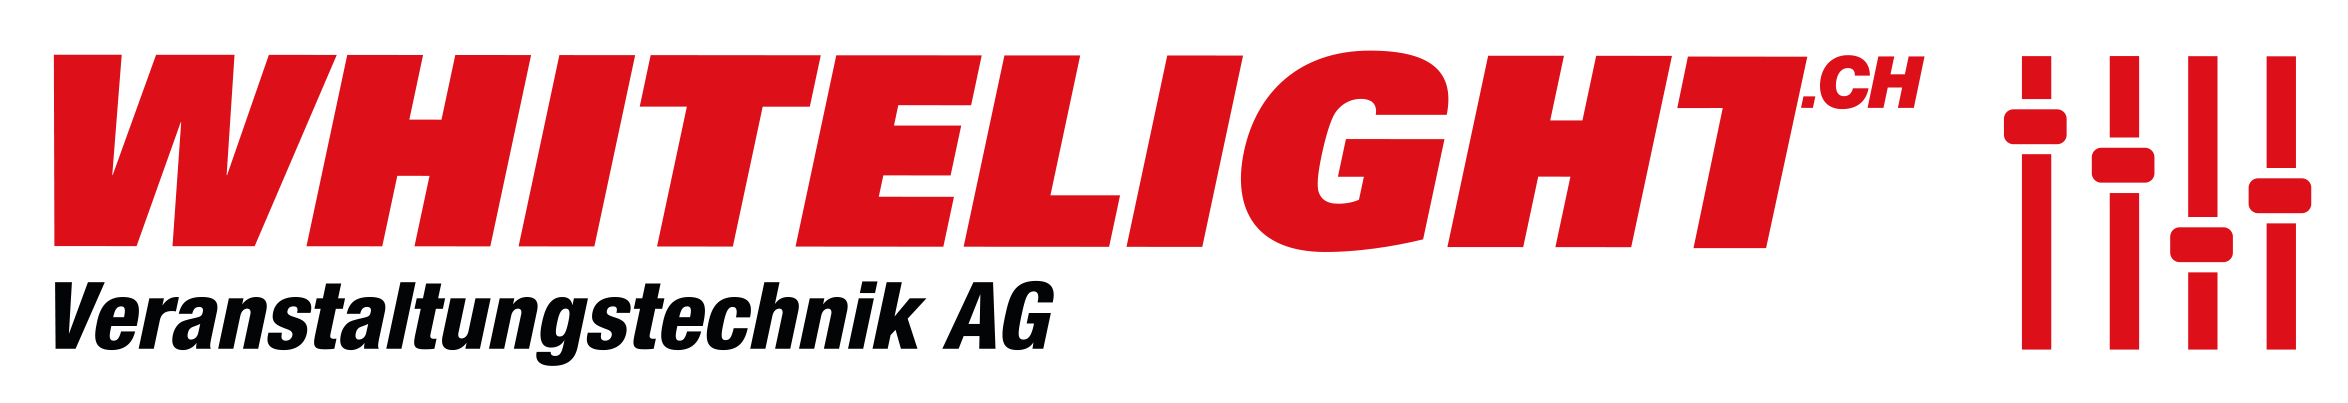 Whitelight-Logo-2020-schwarz.png